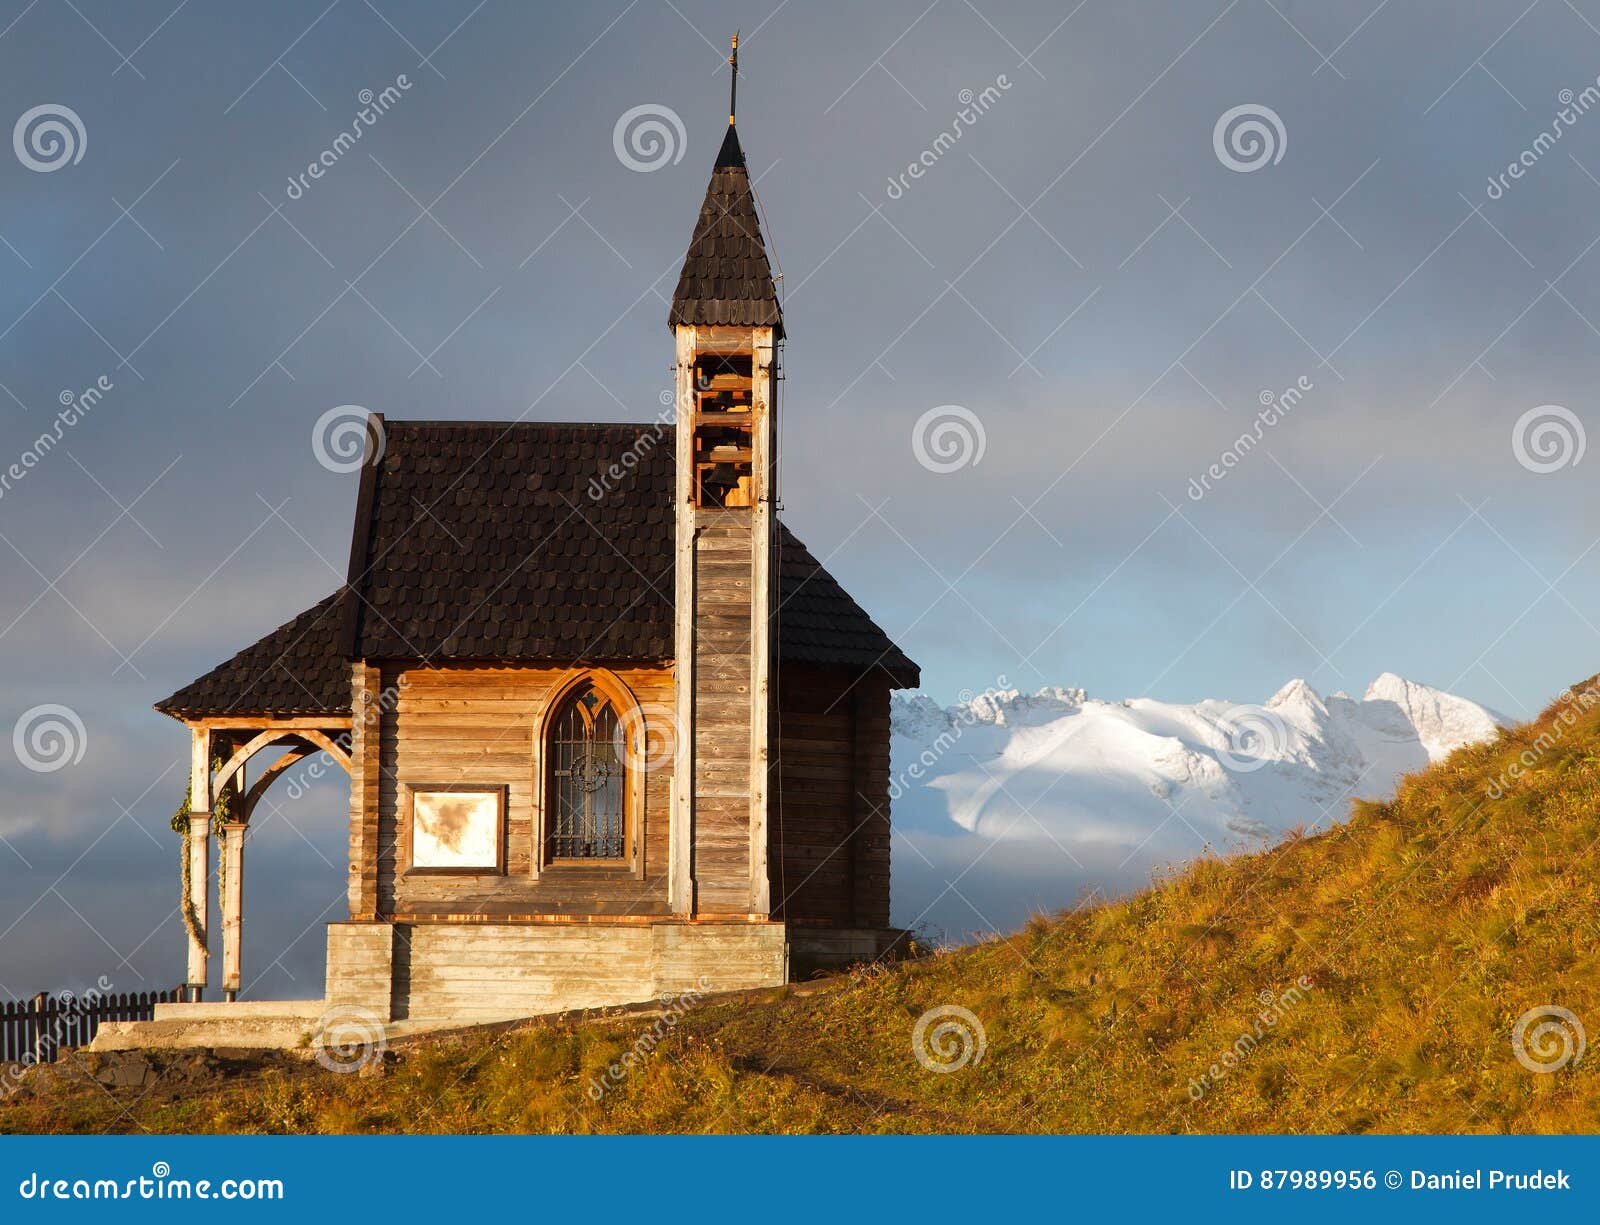 church or chapel on col di lana and mount marmolada